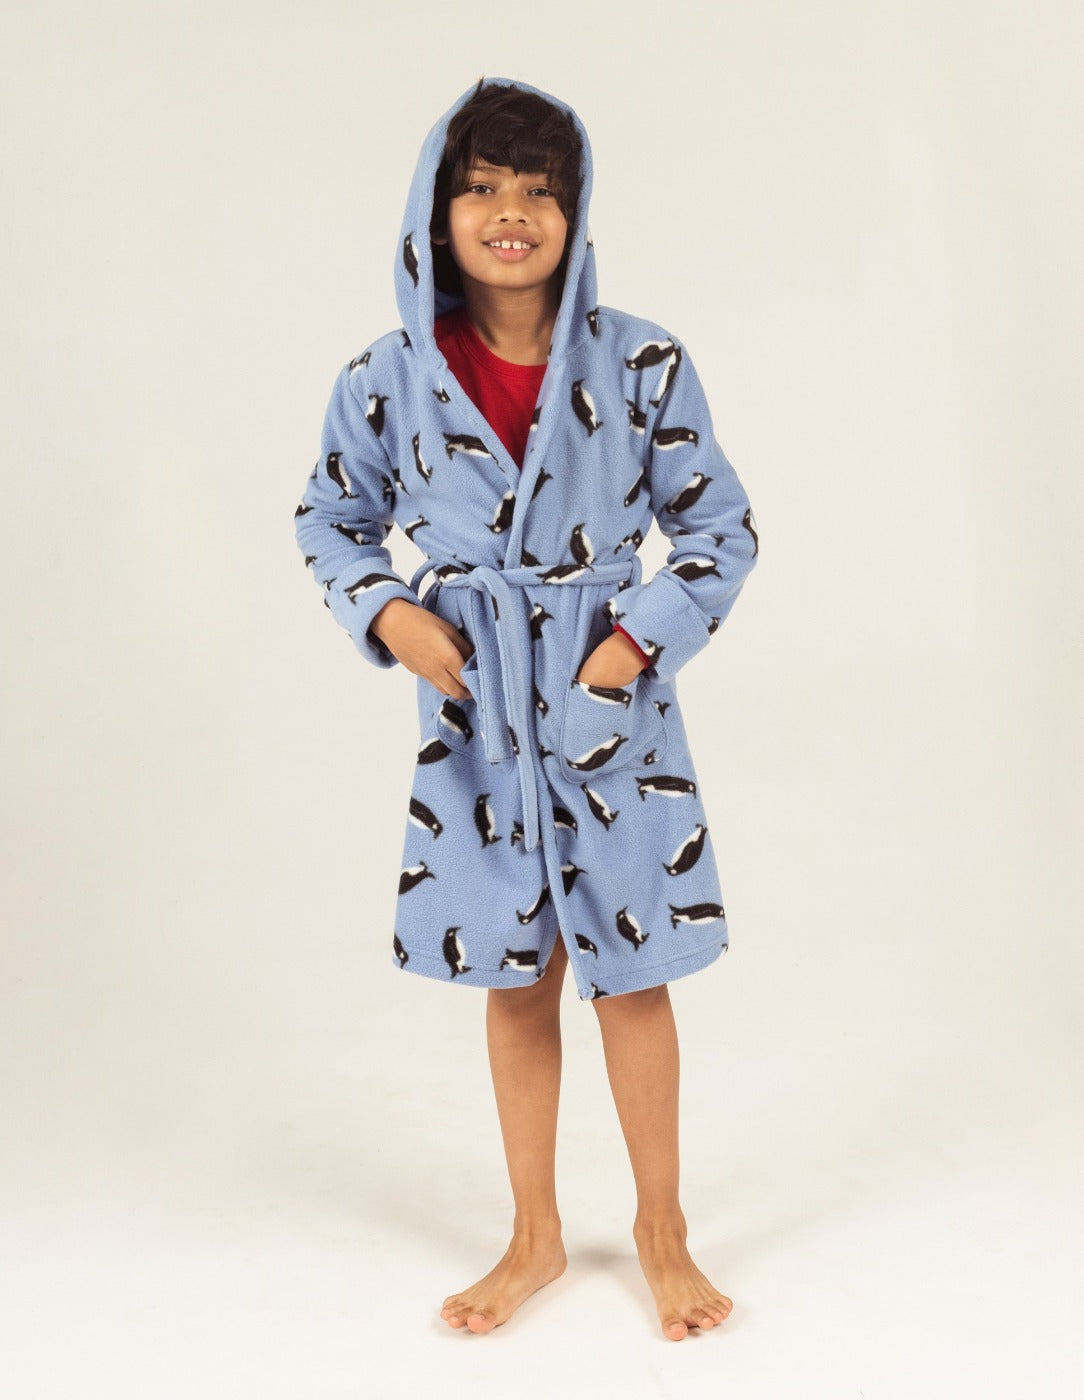 CHGBMOK Boys Girls Robe Hooded Bathrobe Toddler Robes Soft Coral Fleece  Pajamas Unisex Dressing Gown for Kids - Walmart.com